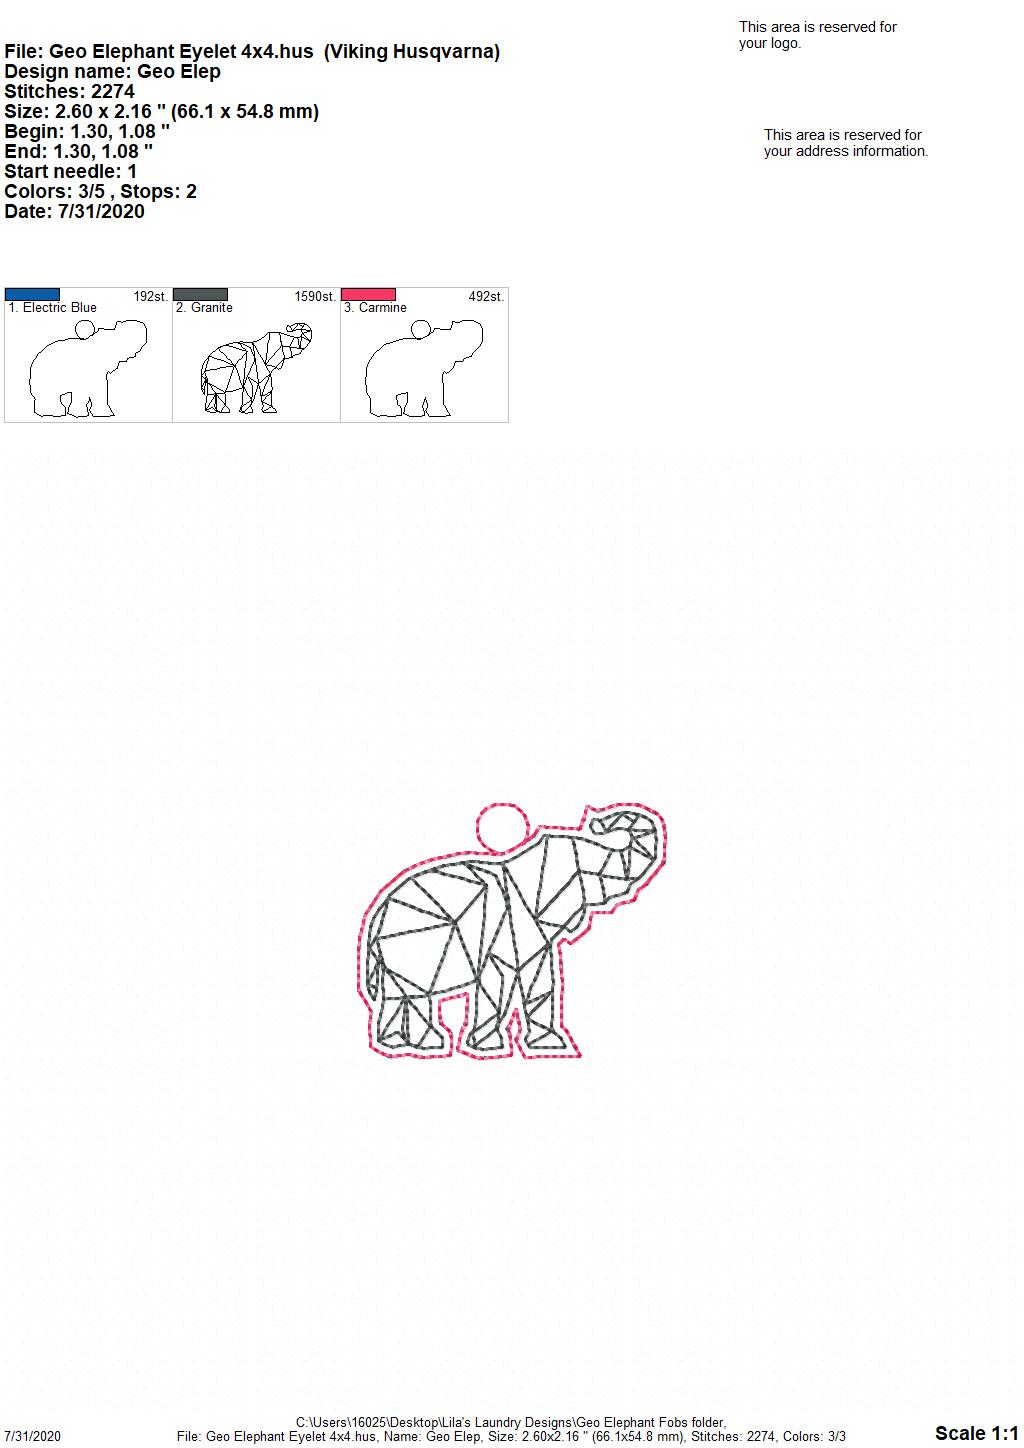 Geo Elephant Fobs - DIGITAL Embroidery DESIGN